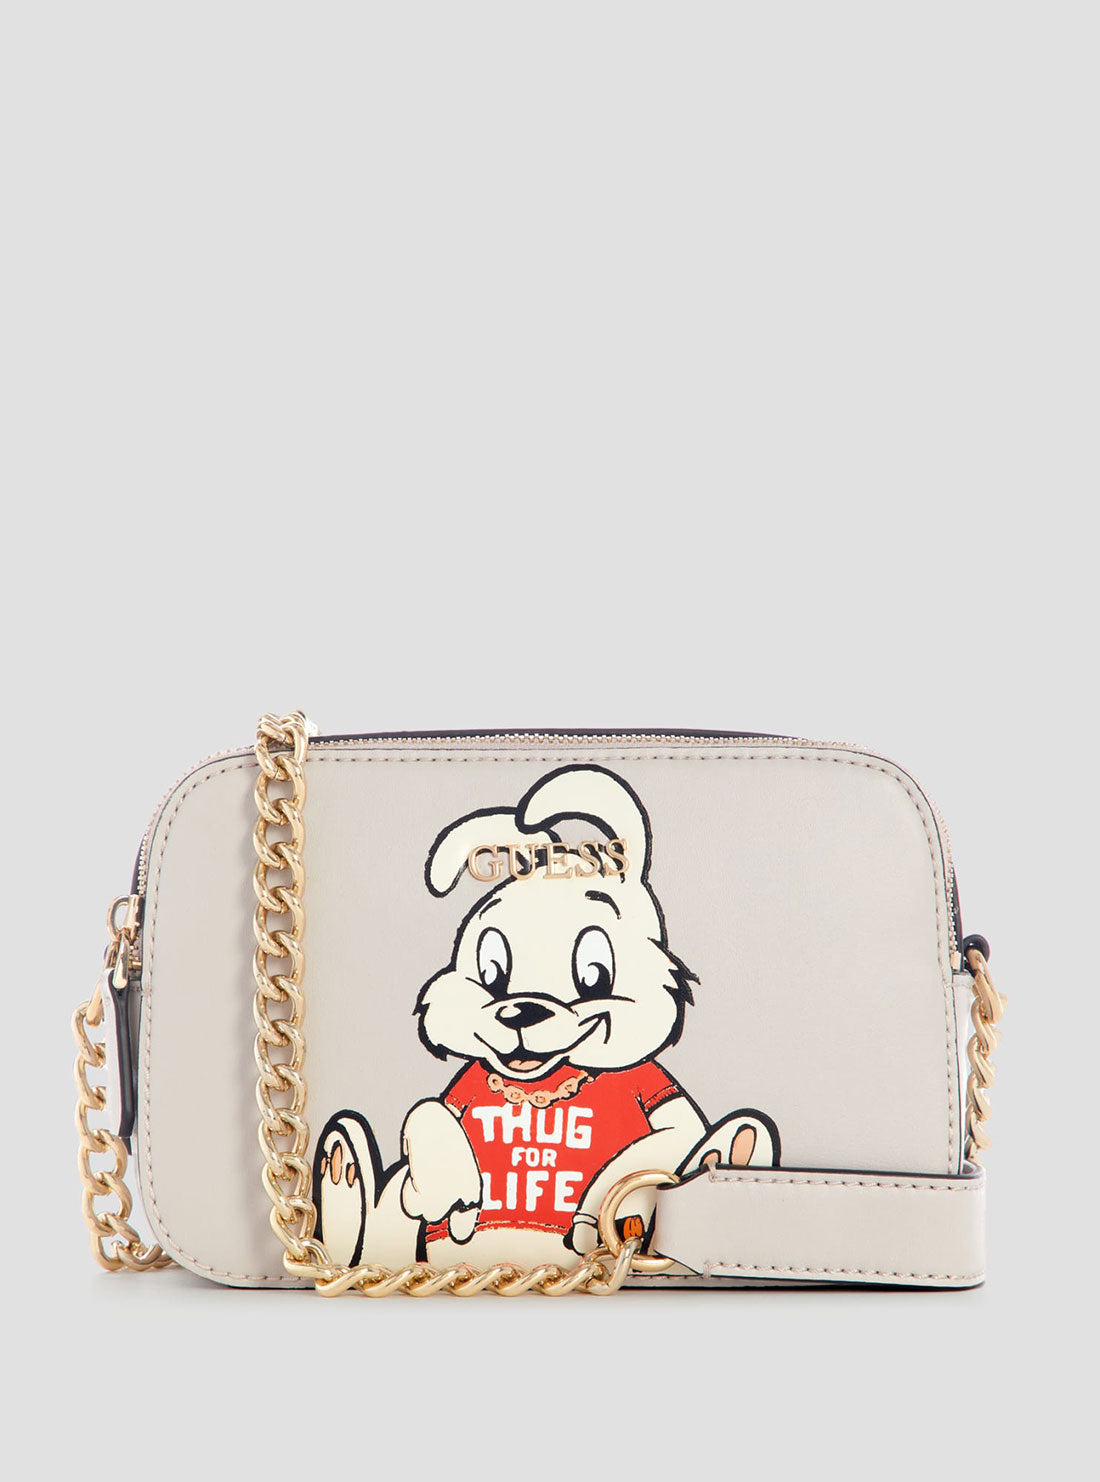 GUESS Women's Banksy Stone Rabbit Crossbody Bag VR873914 Front View